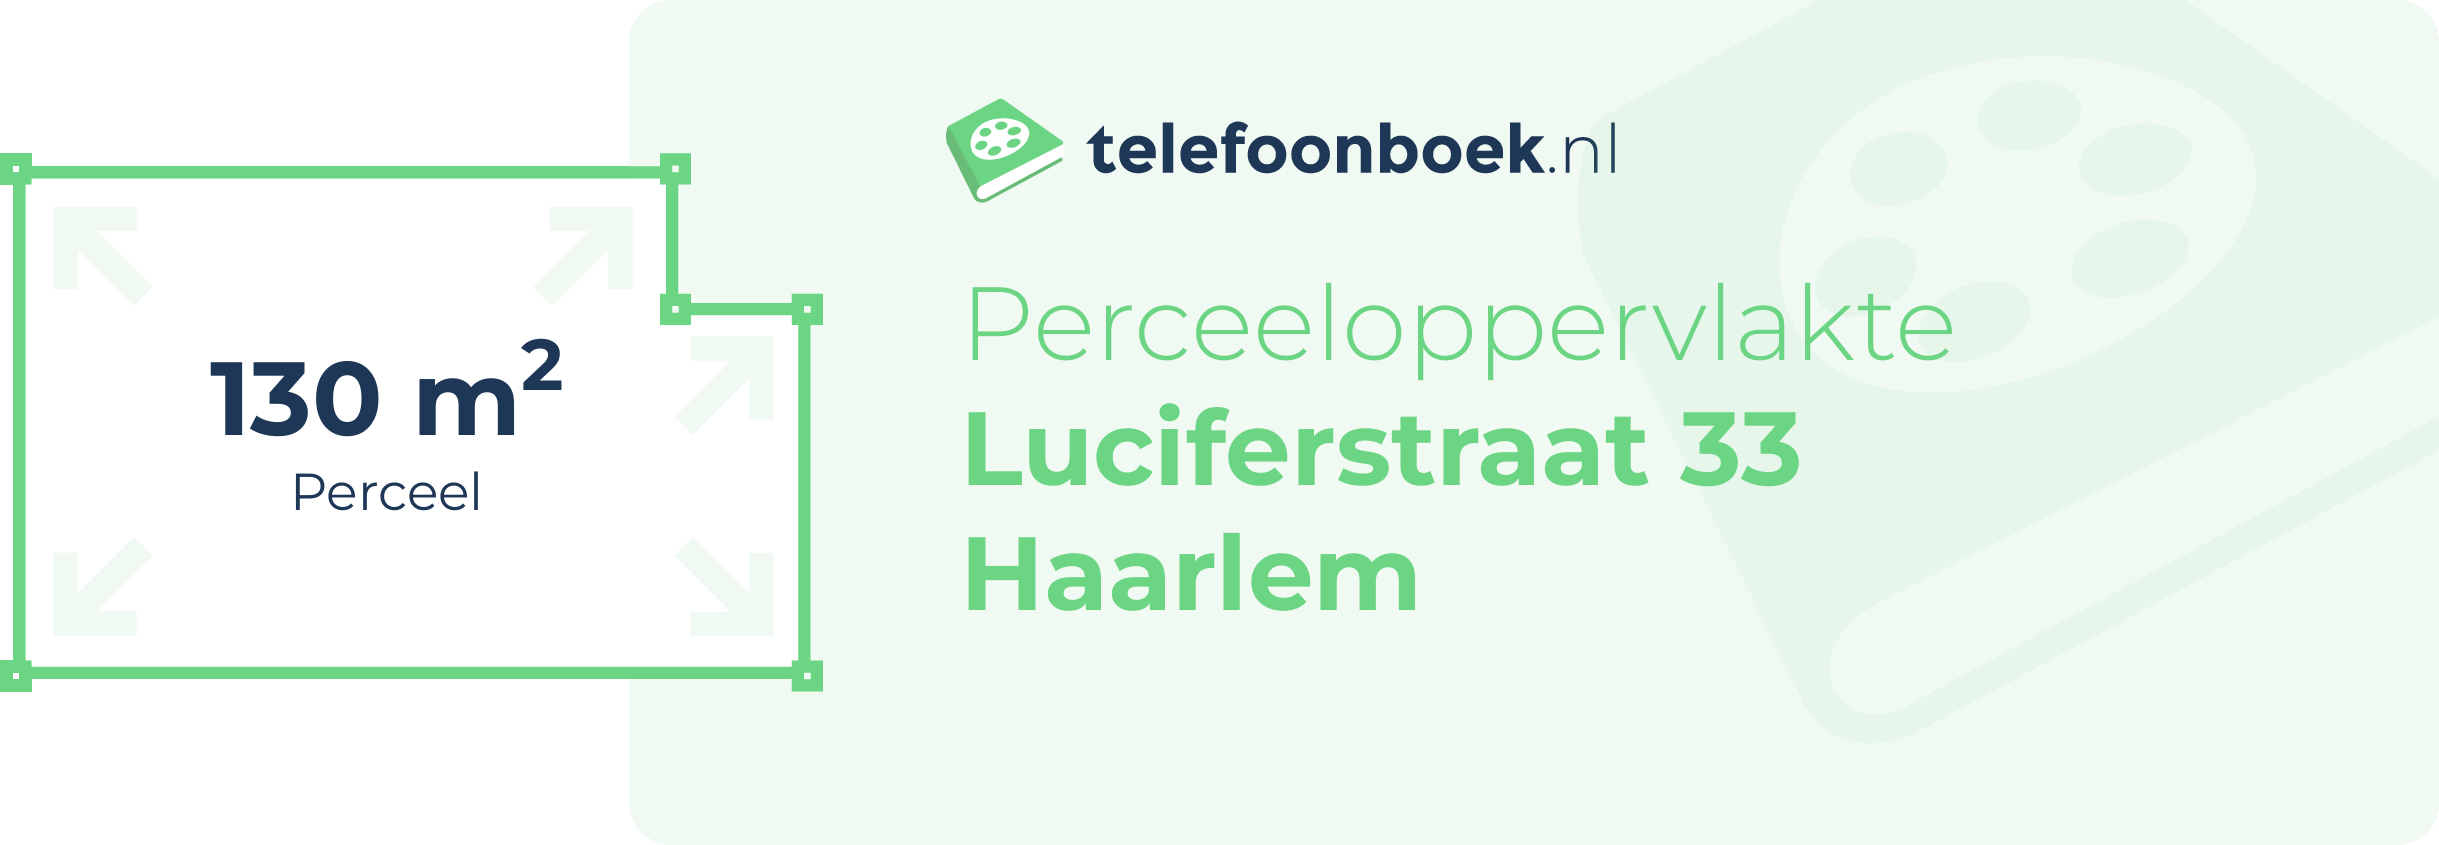 Perceeloppervlakte Luciferstraat 33 Haarlem